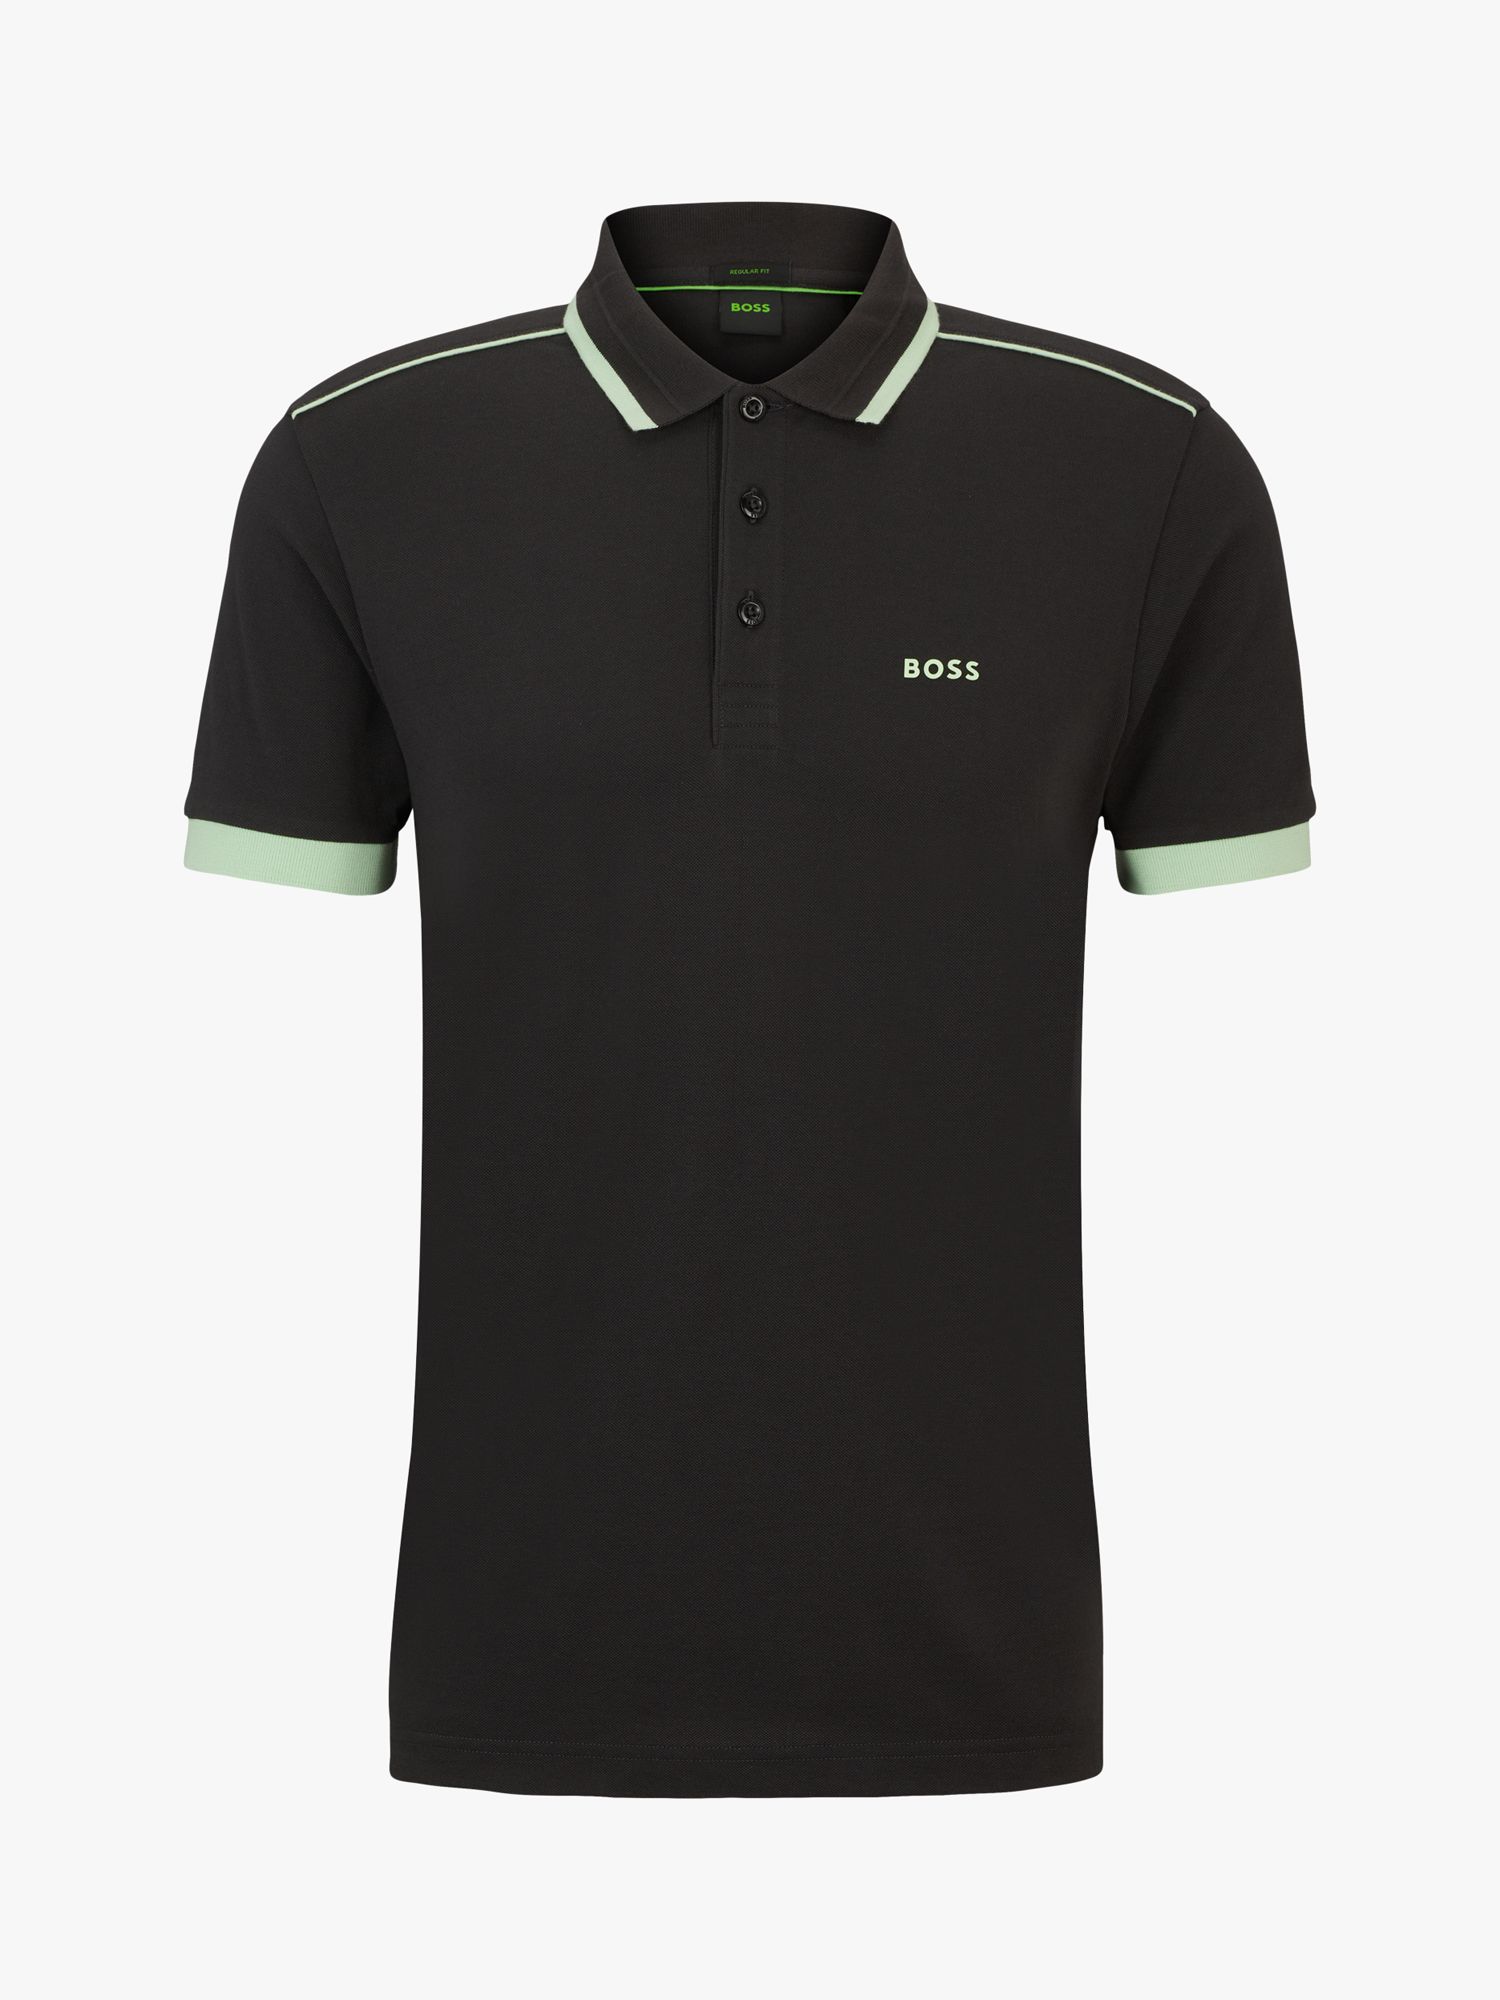 BOSS Paddy 016 Short Sleeve Polo Shirt, Charcoal, M